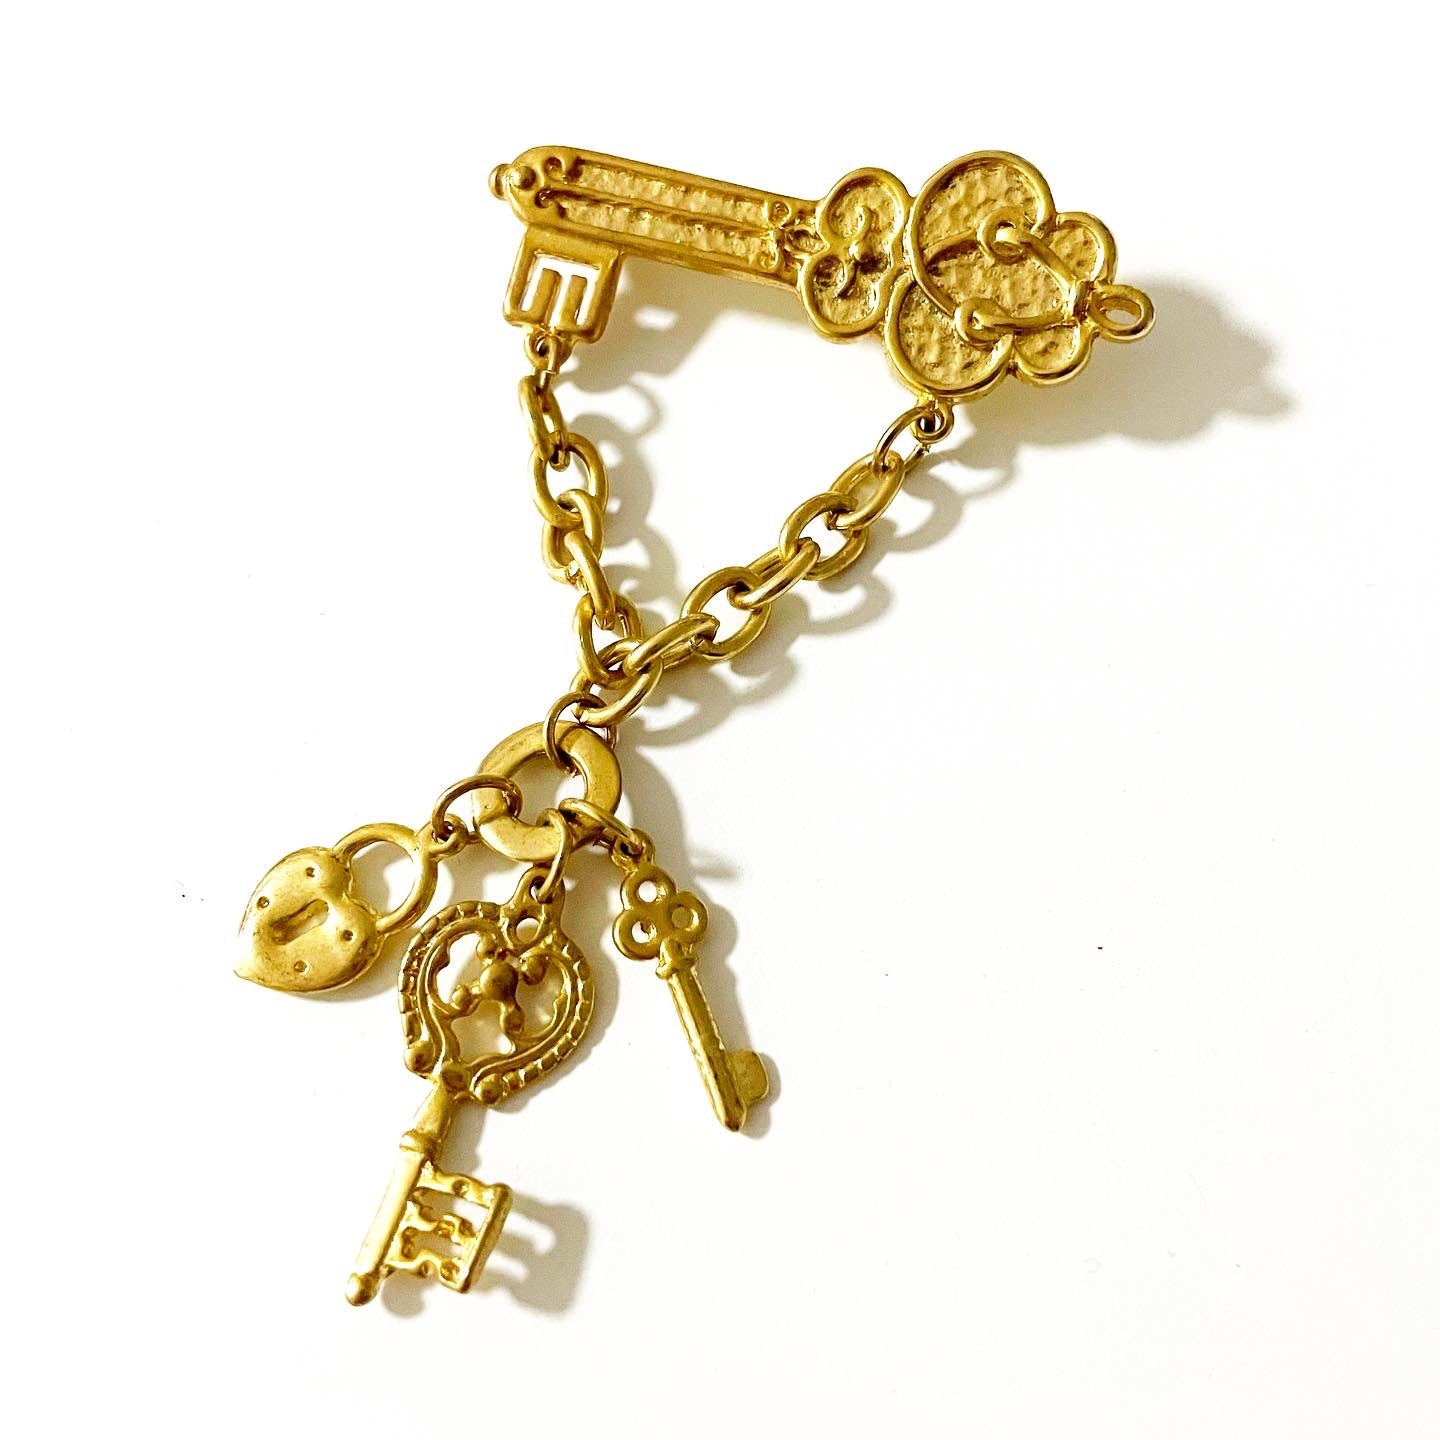 Vintage 1928 jewelry gold tone key-themed dangle brooch